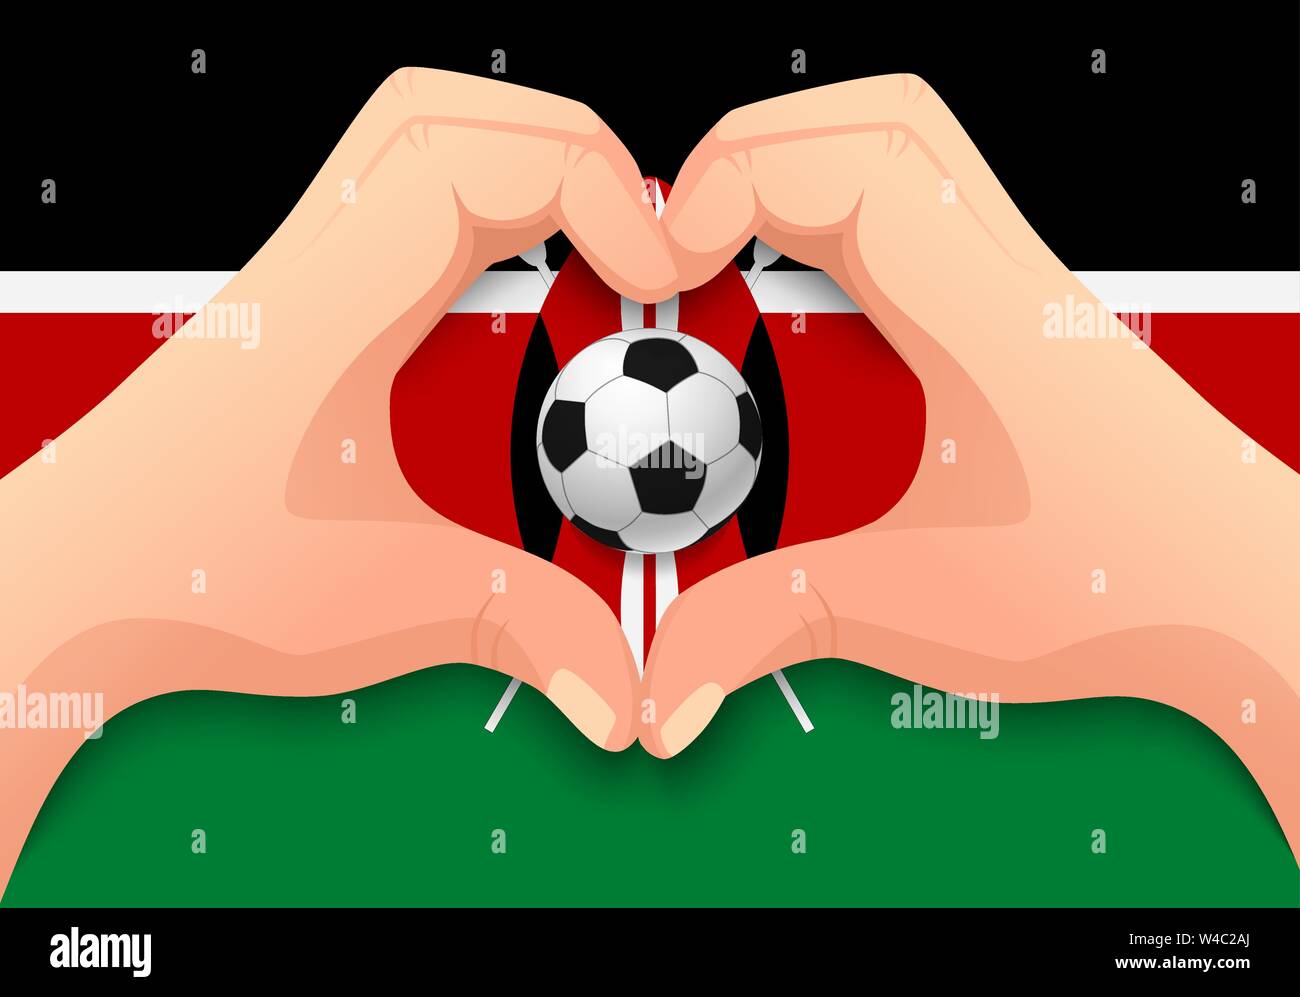 19 Kenya national football team Vector Images